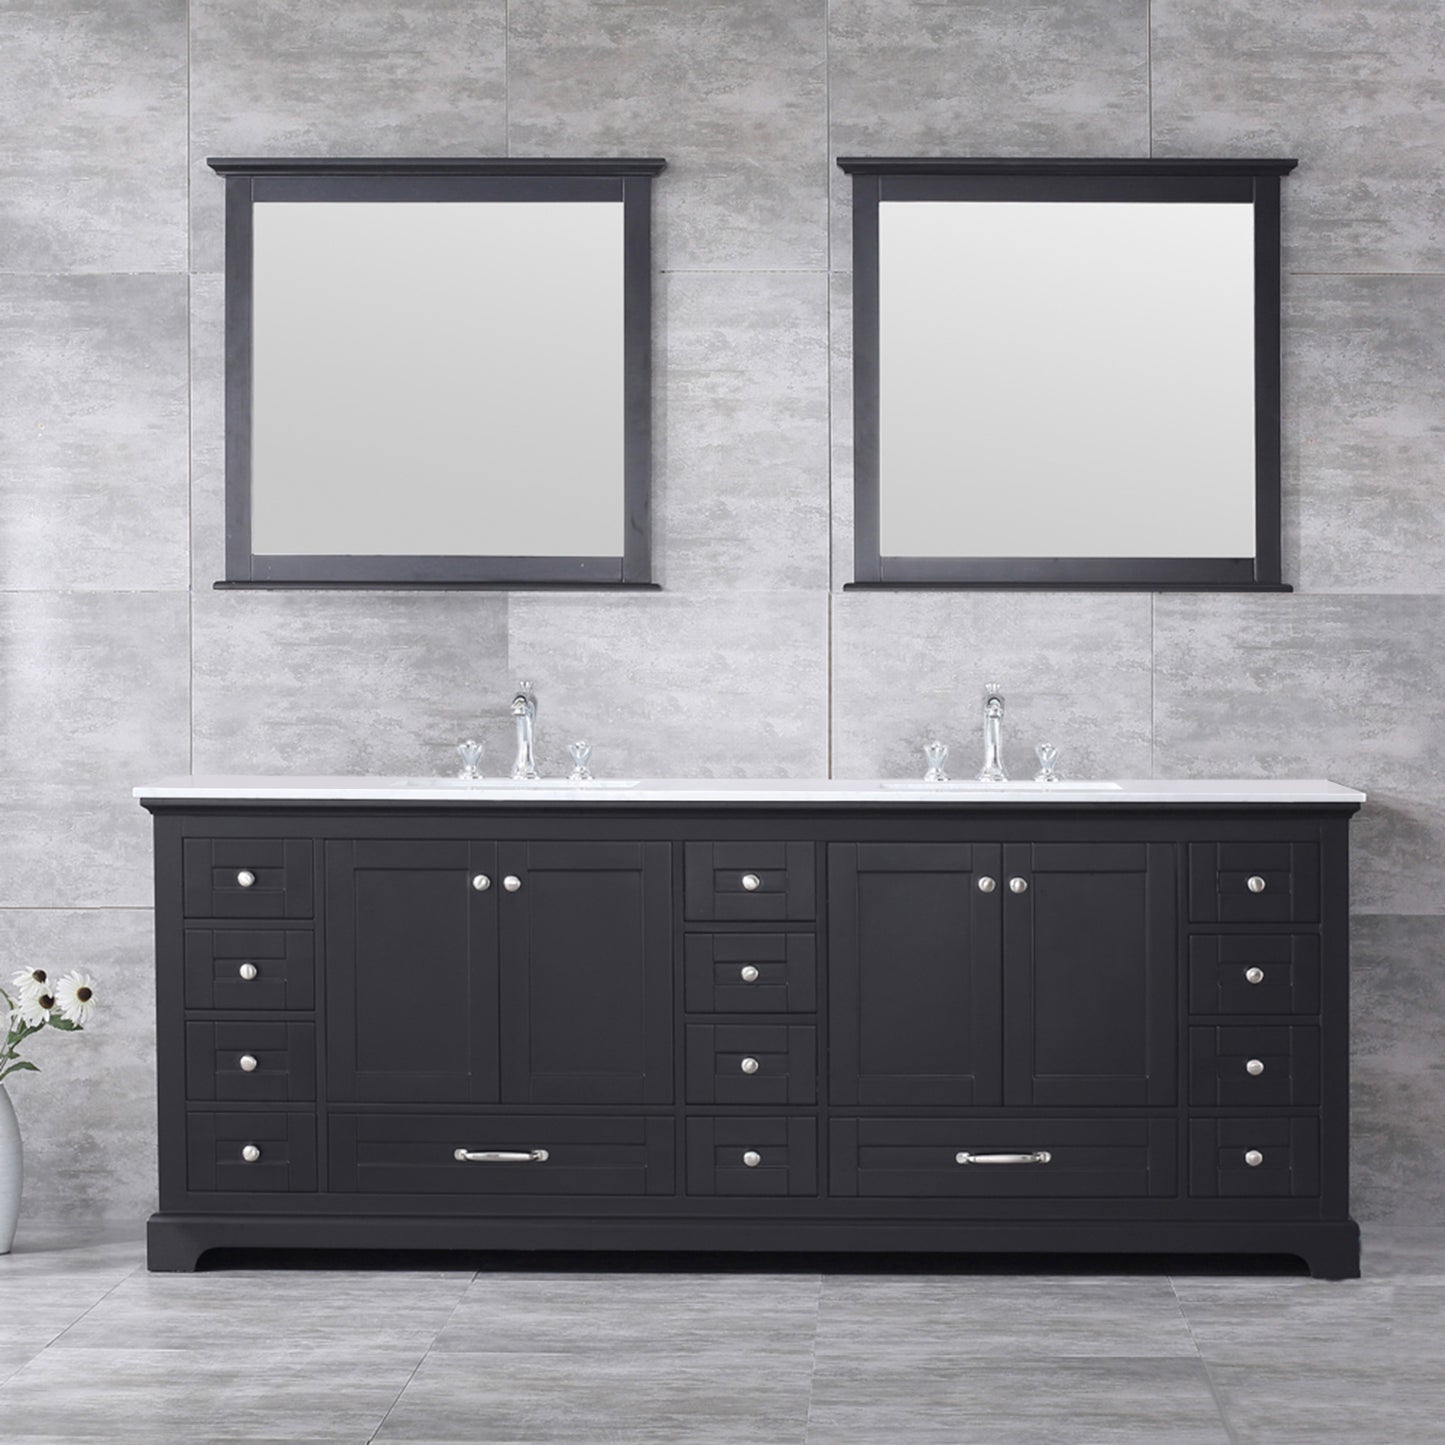 Lexora Dukes 84" Double Vanity, White Quartz Top, White Square Sinks and 34" Mirrors w/ Faucets - Luxe Bathroom Vanities